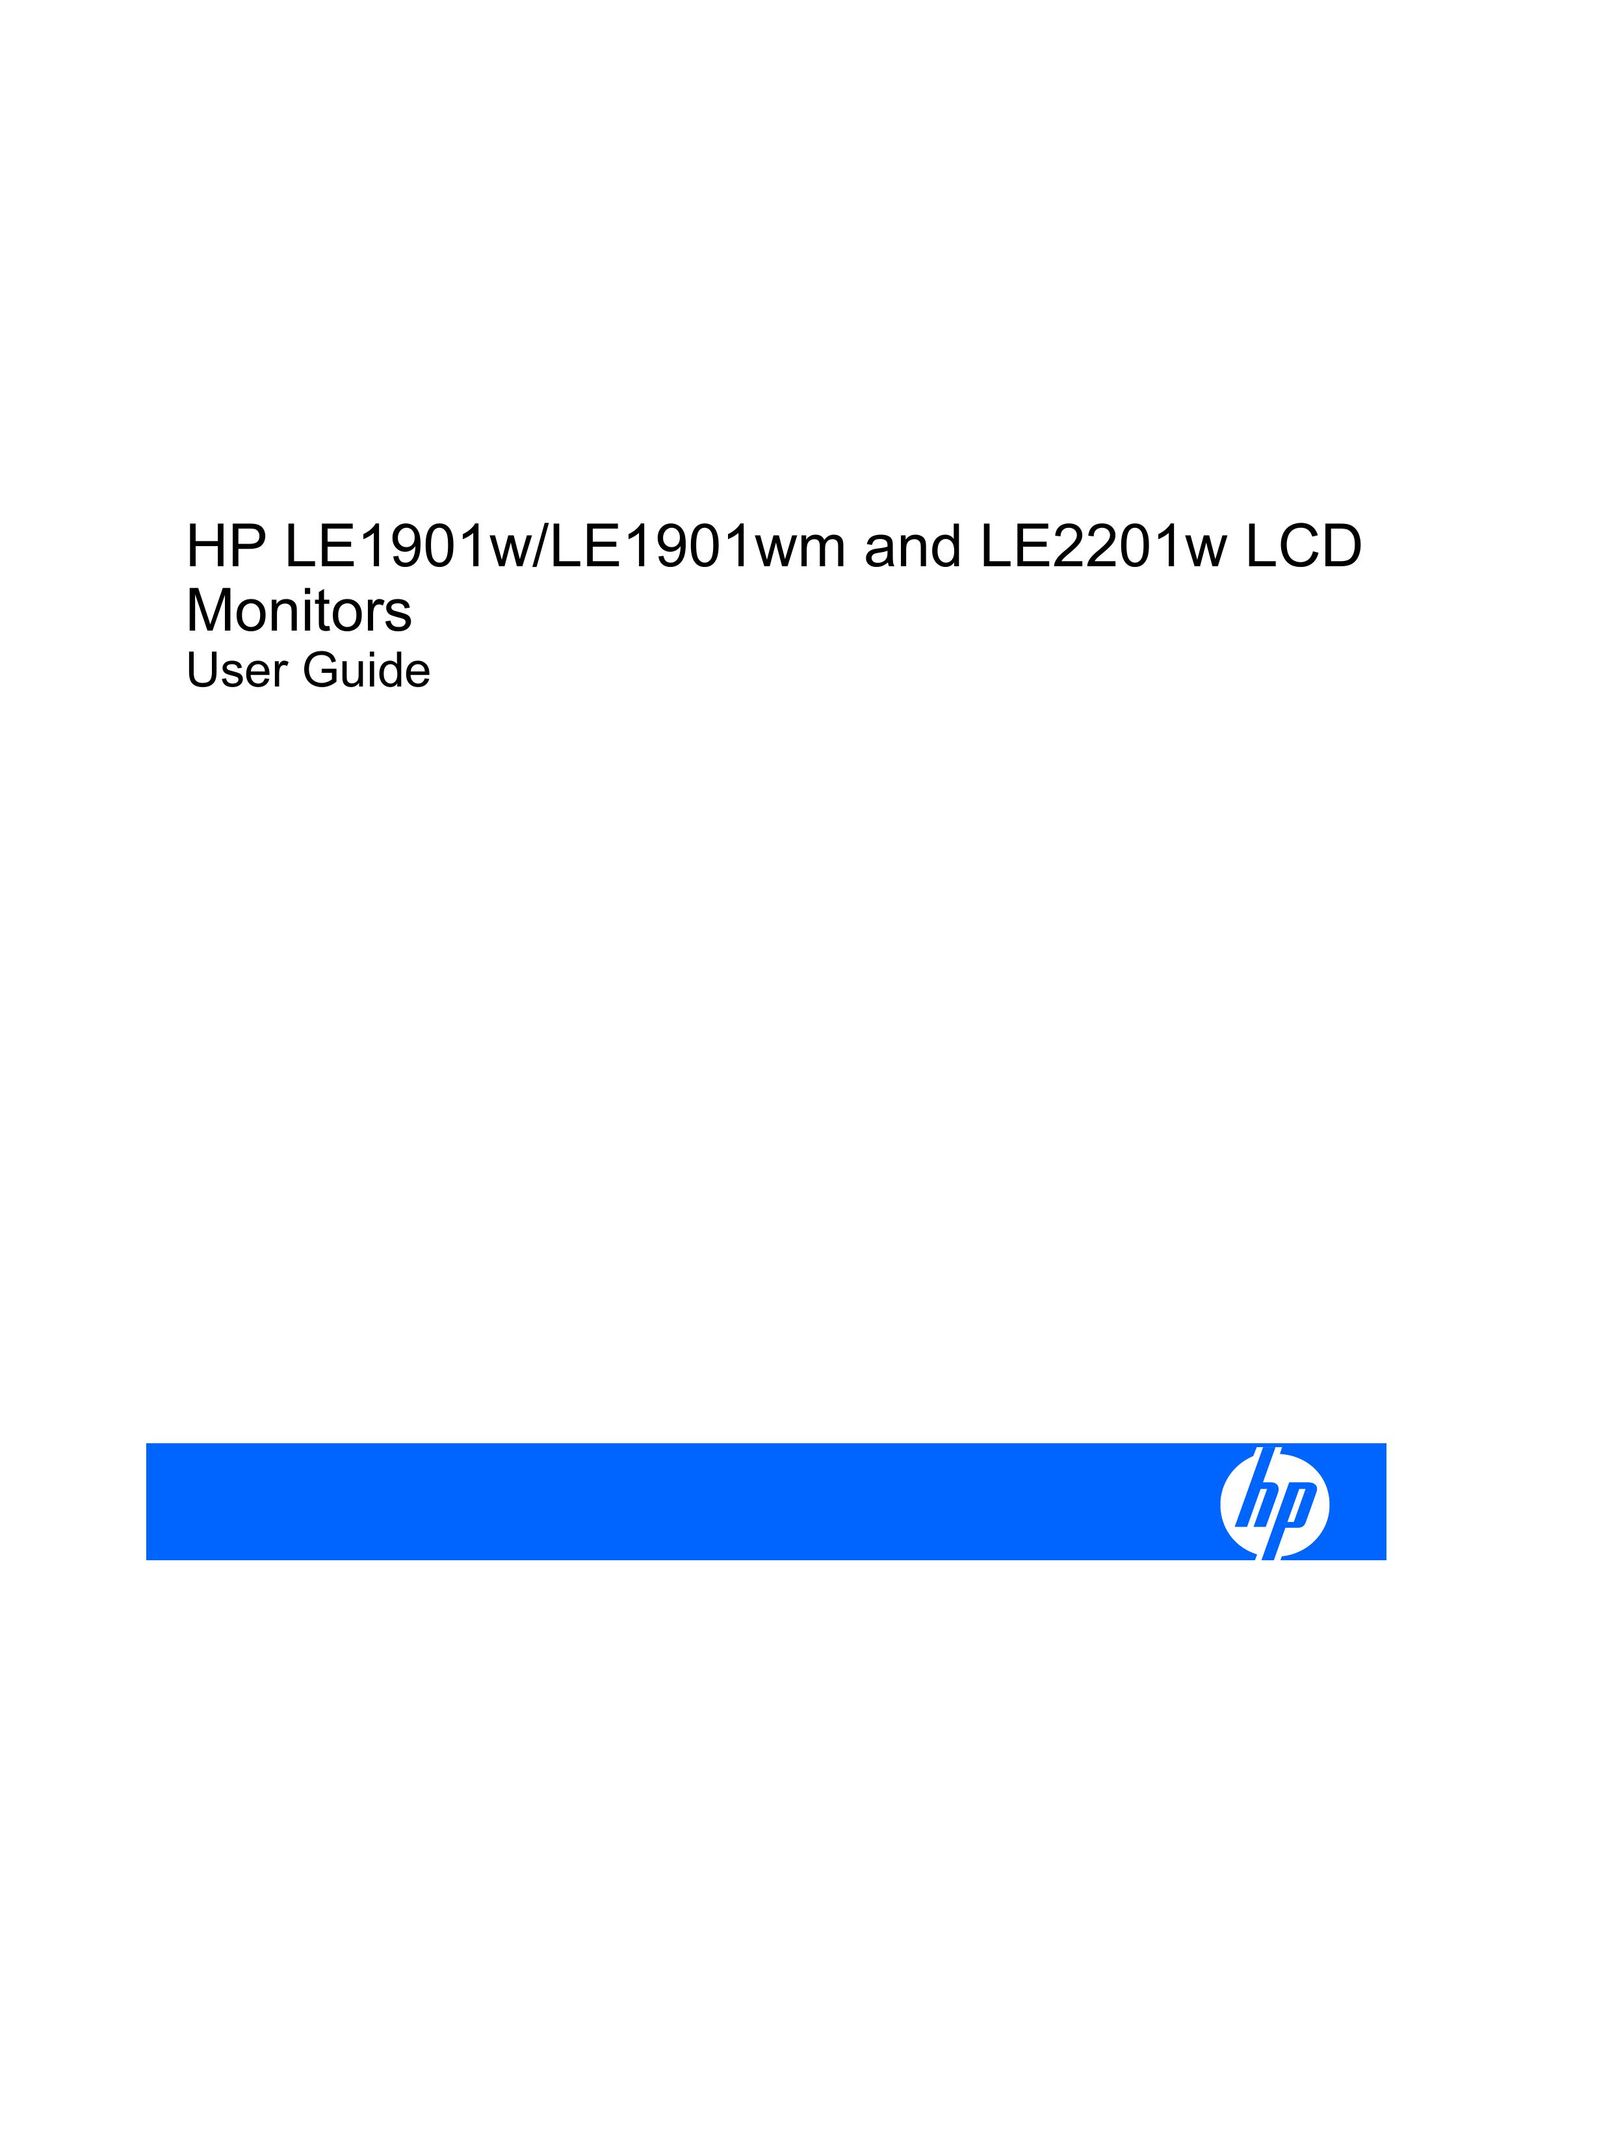 HP (Hewlett-Packard) LE2201w Car Video System User Manual